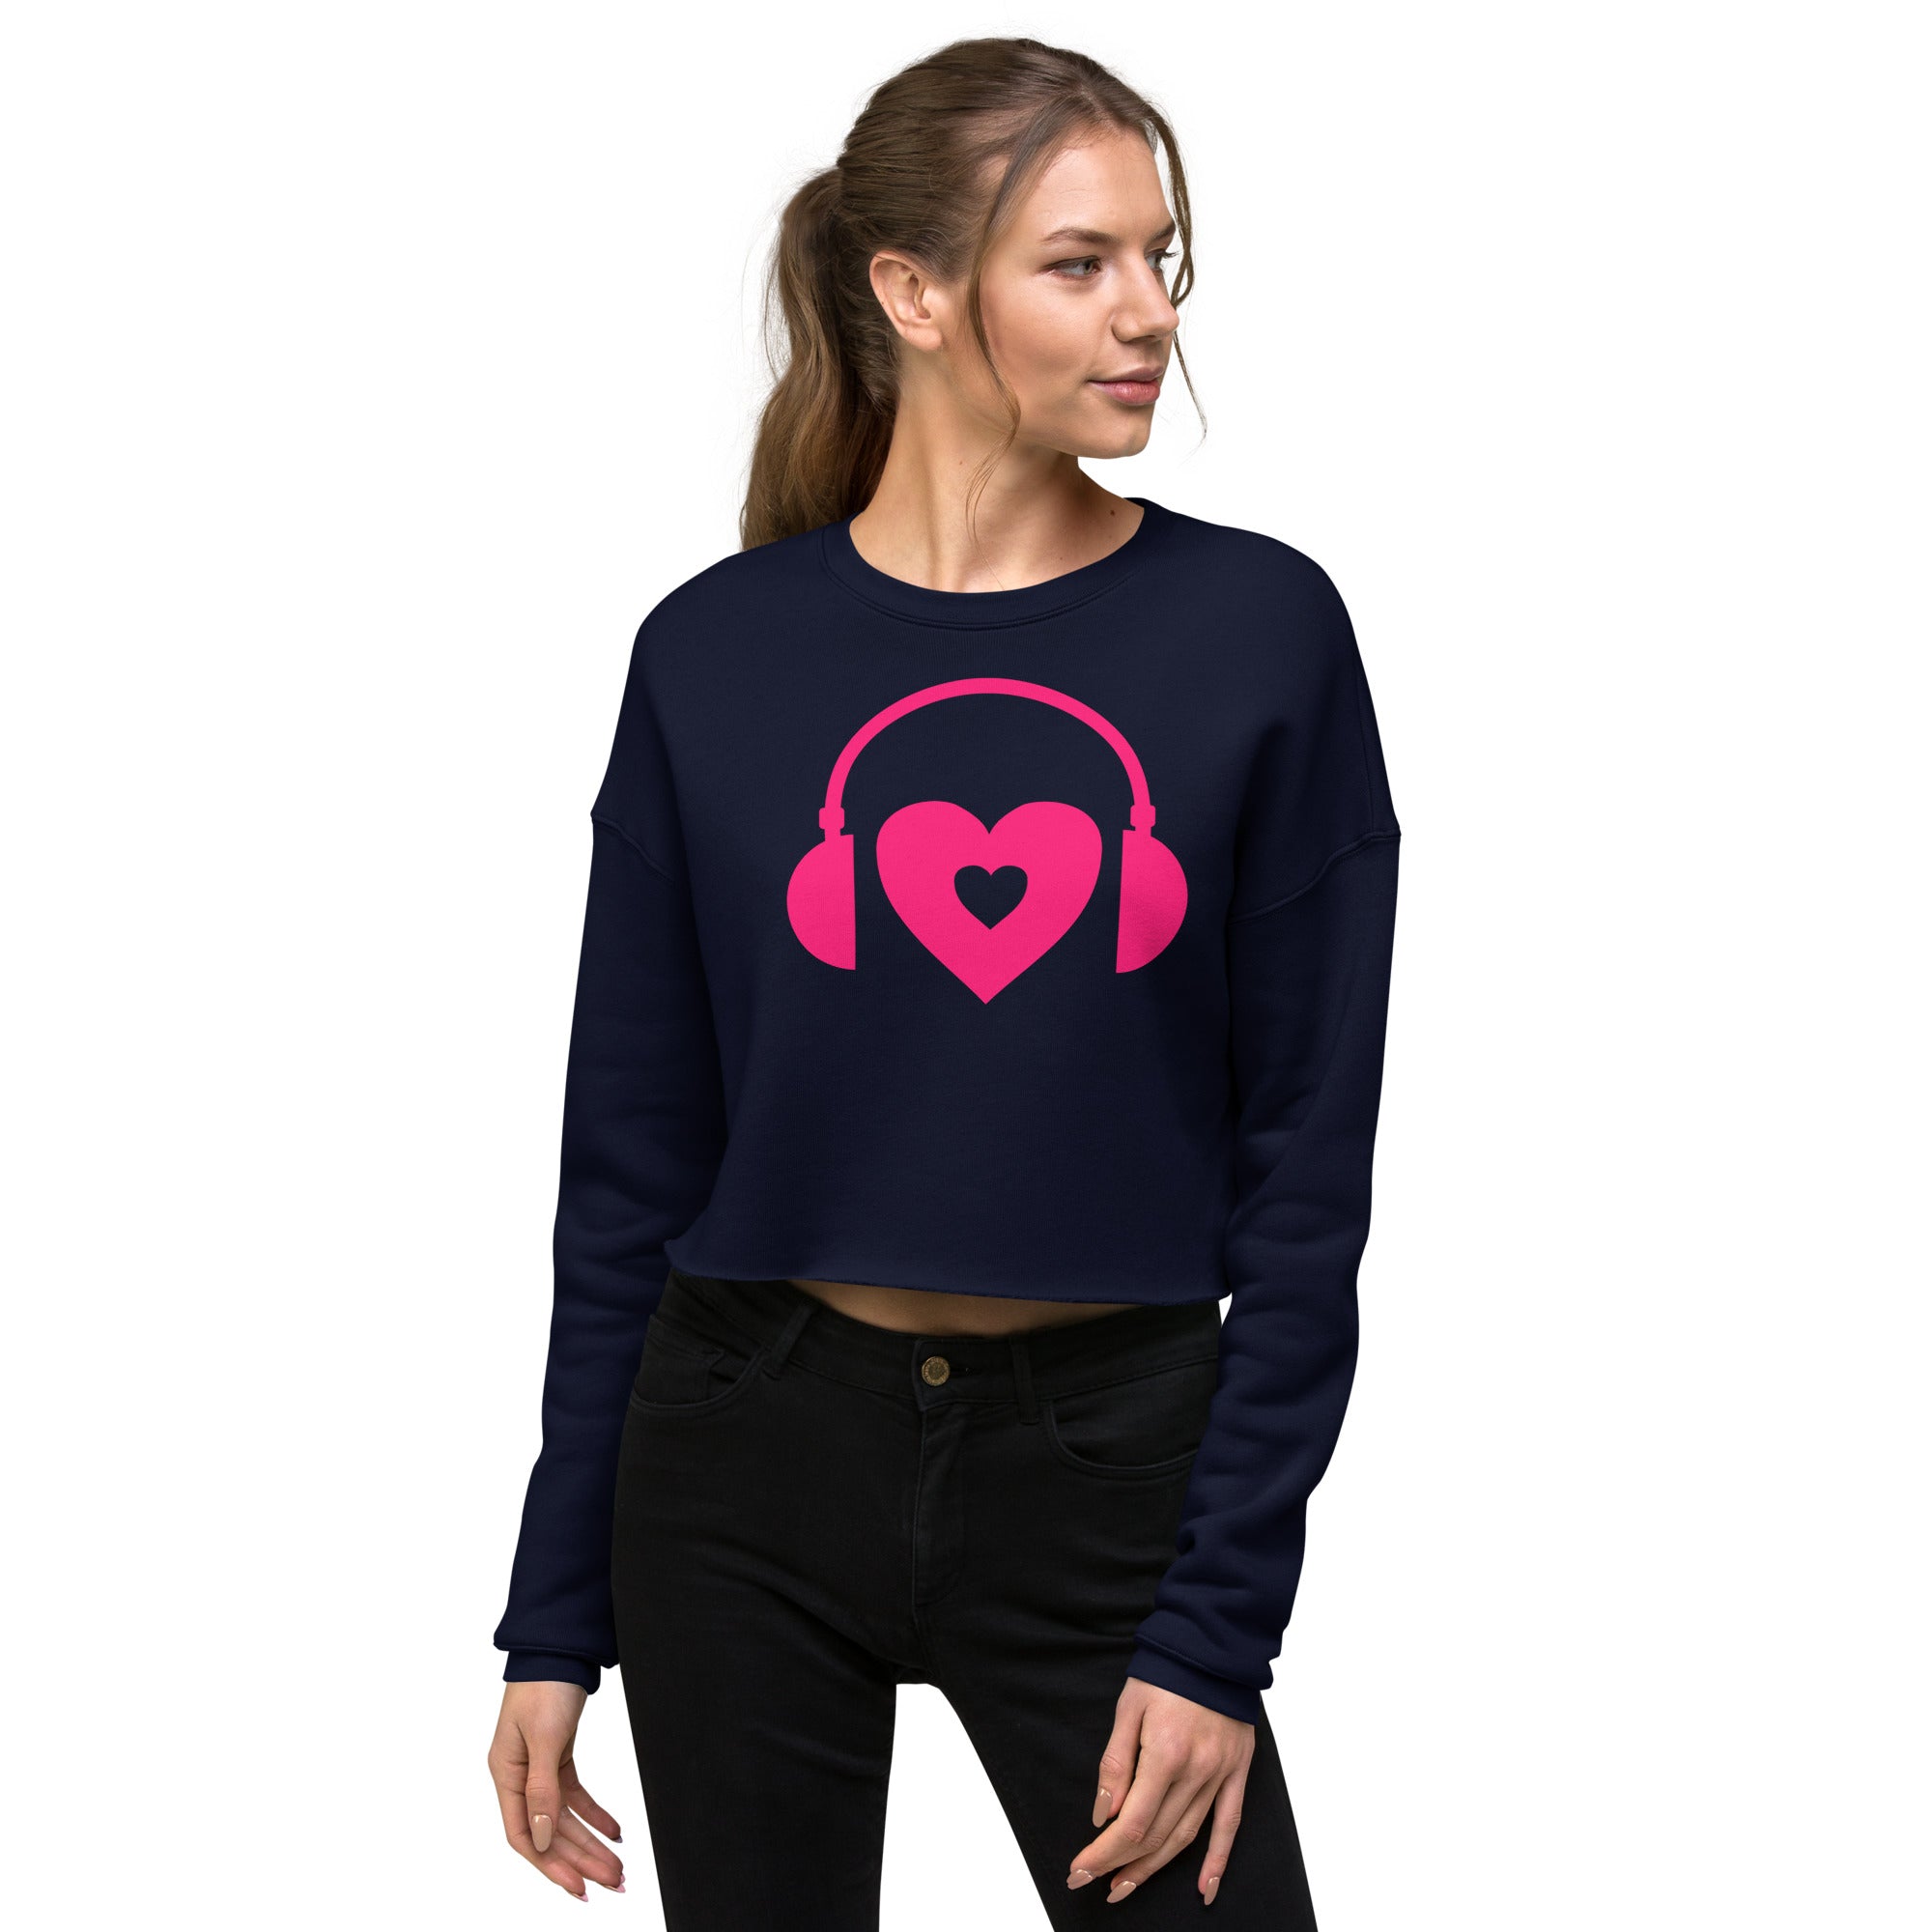 Heart That Listens Crop Sweatshirt